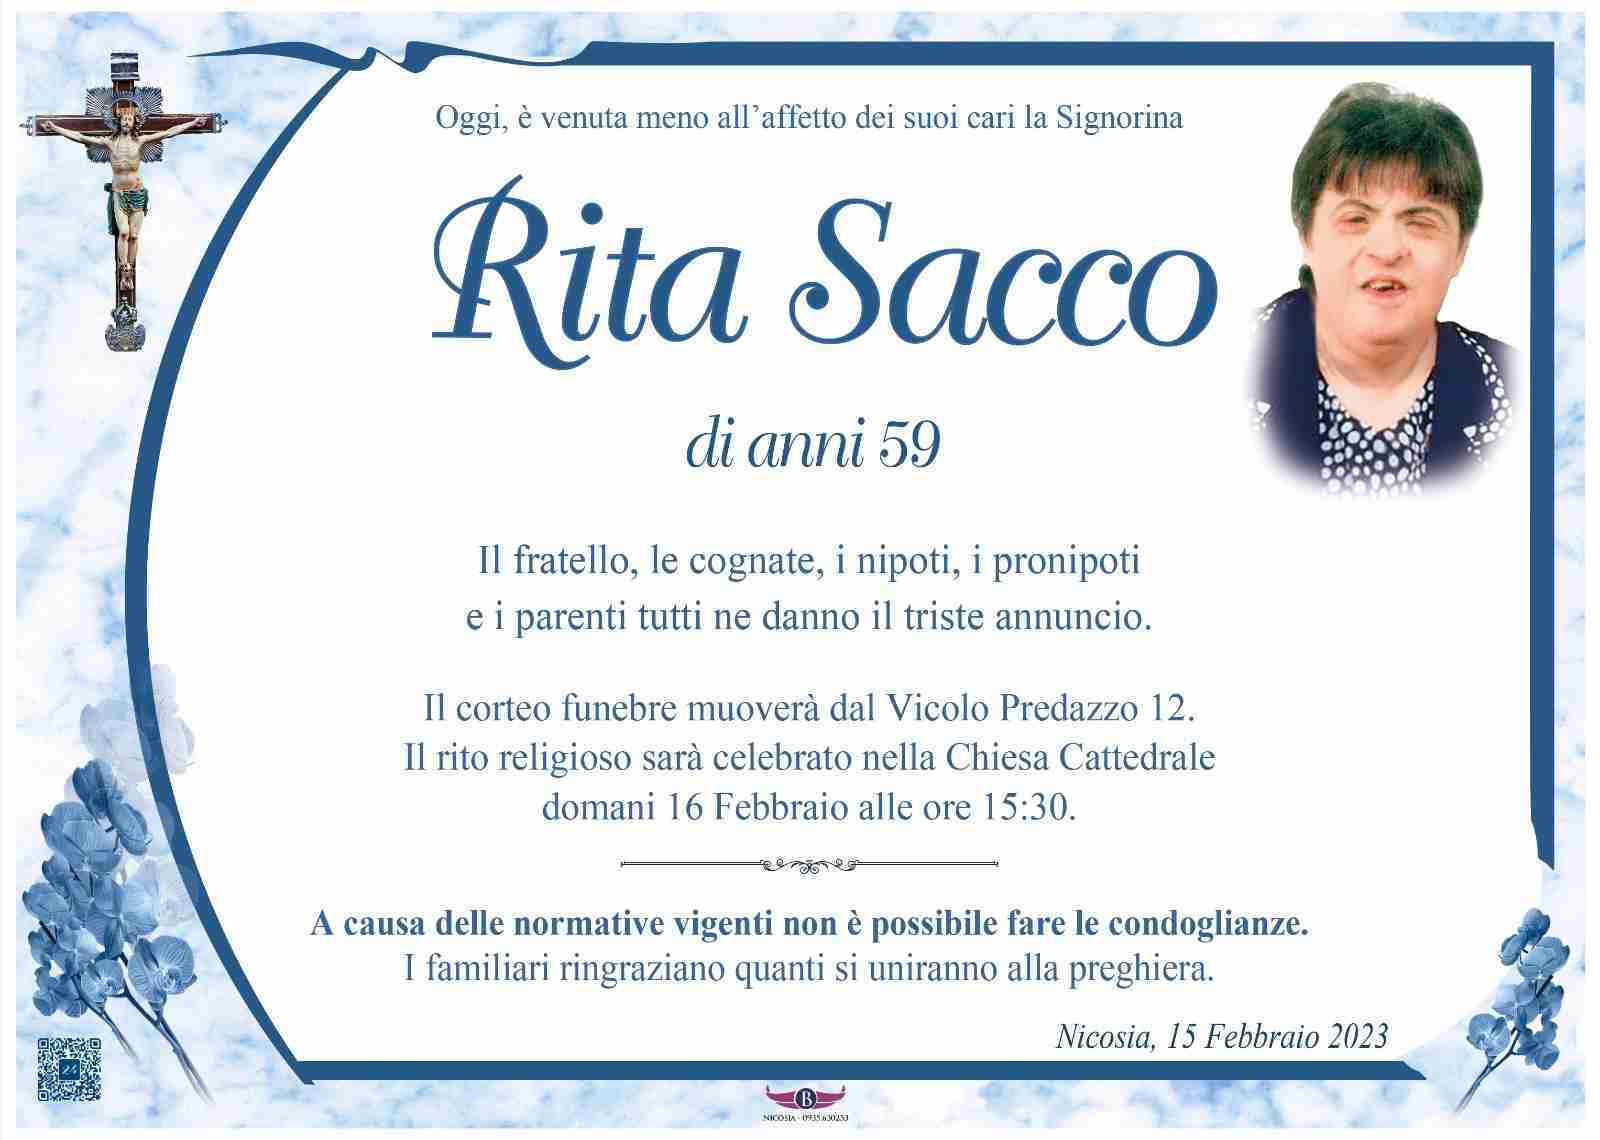 Rita Sacco